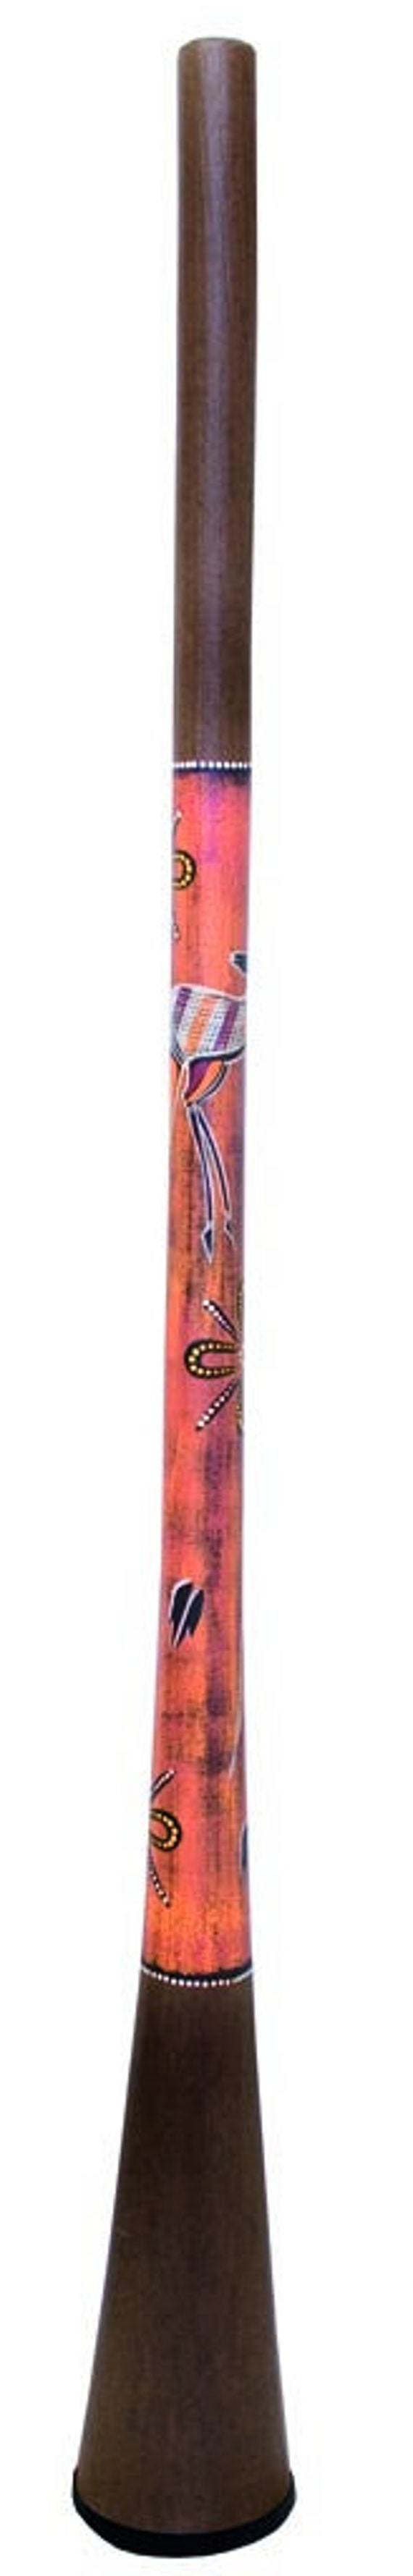 Baked wood Didgeridoo Paint 67 inch Tone D 